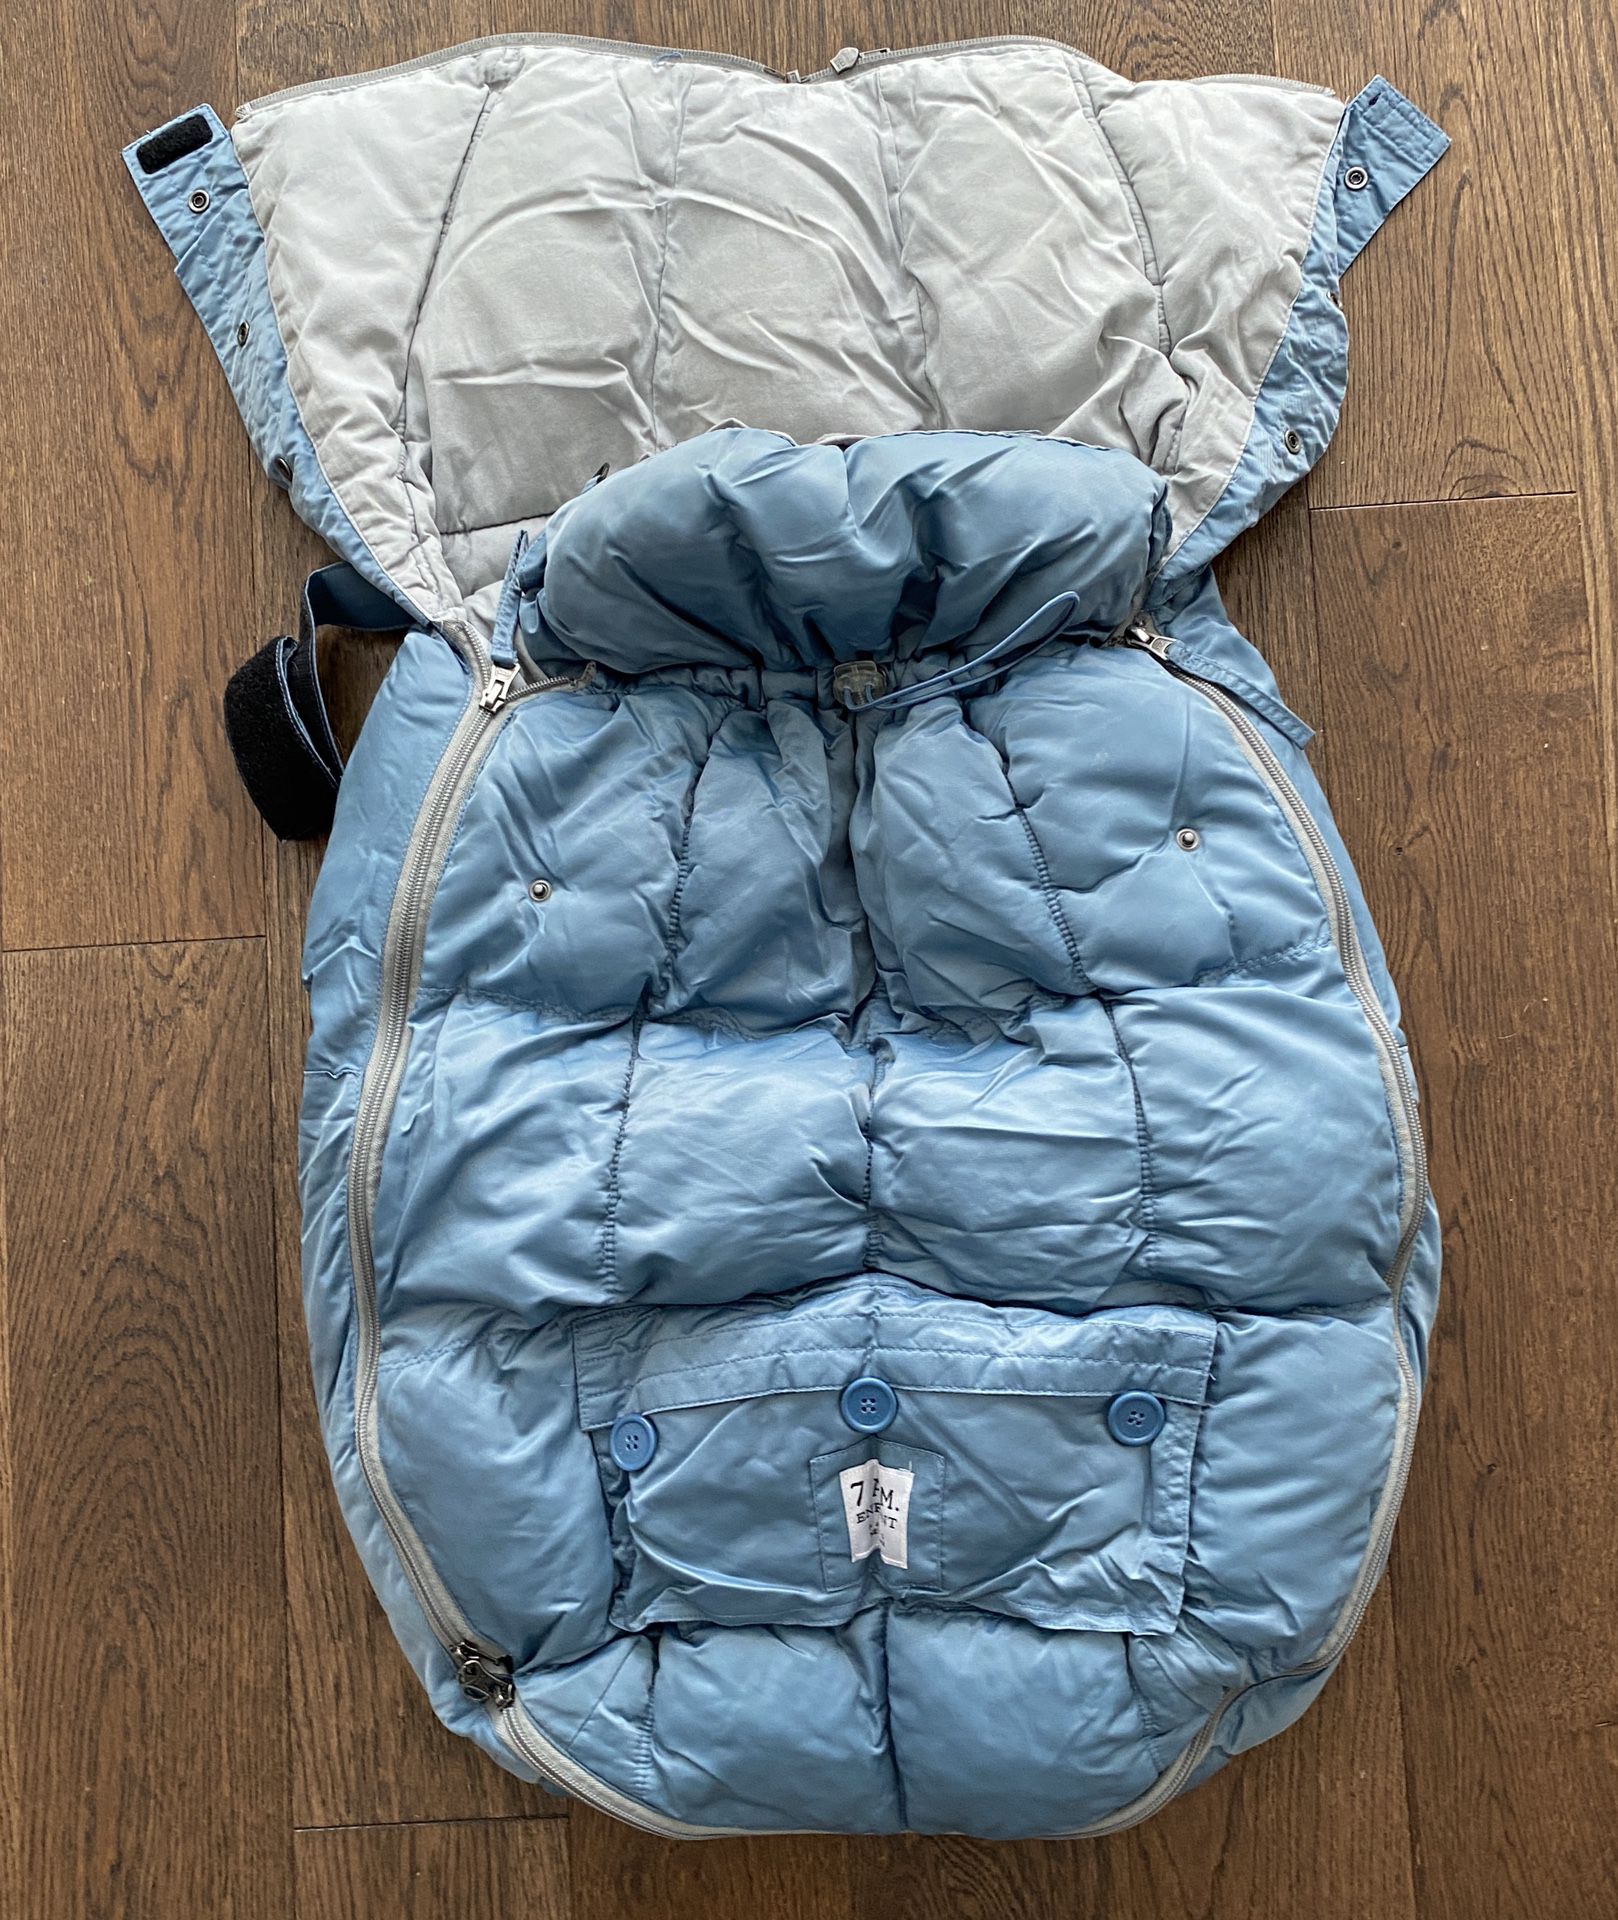 7a.m - medium stroller sleeping bag